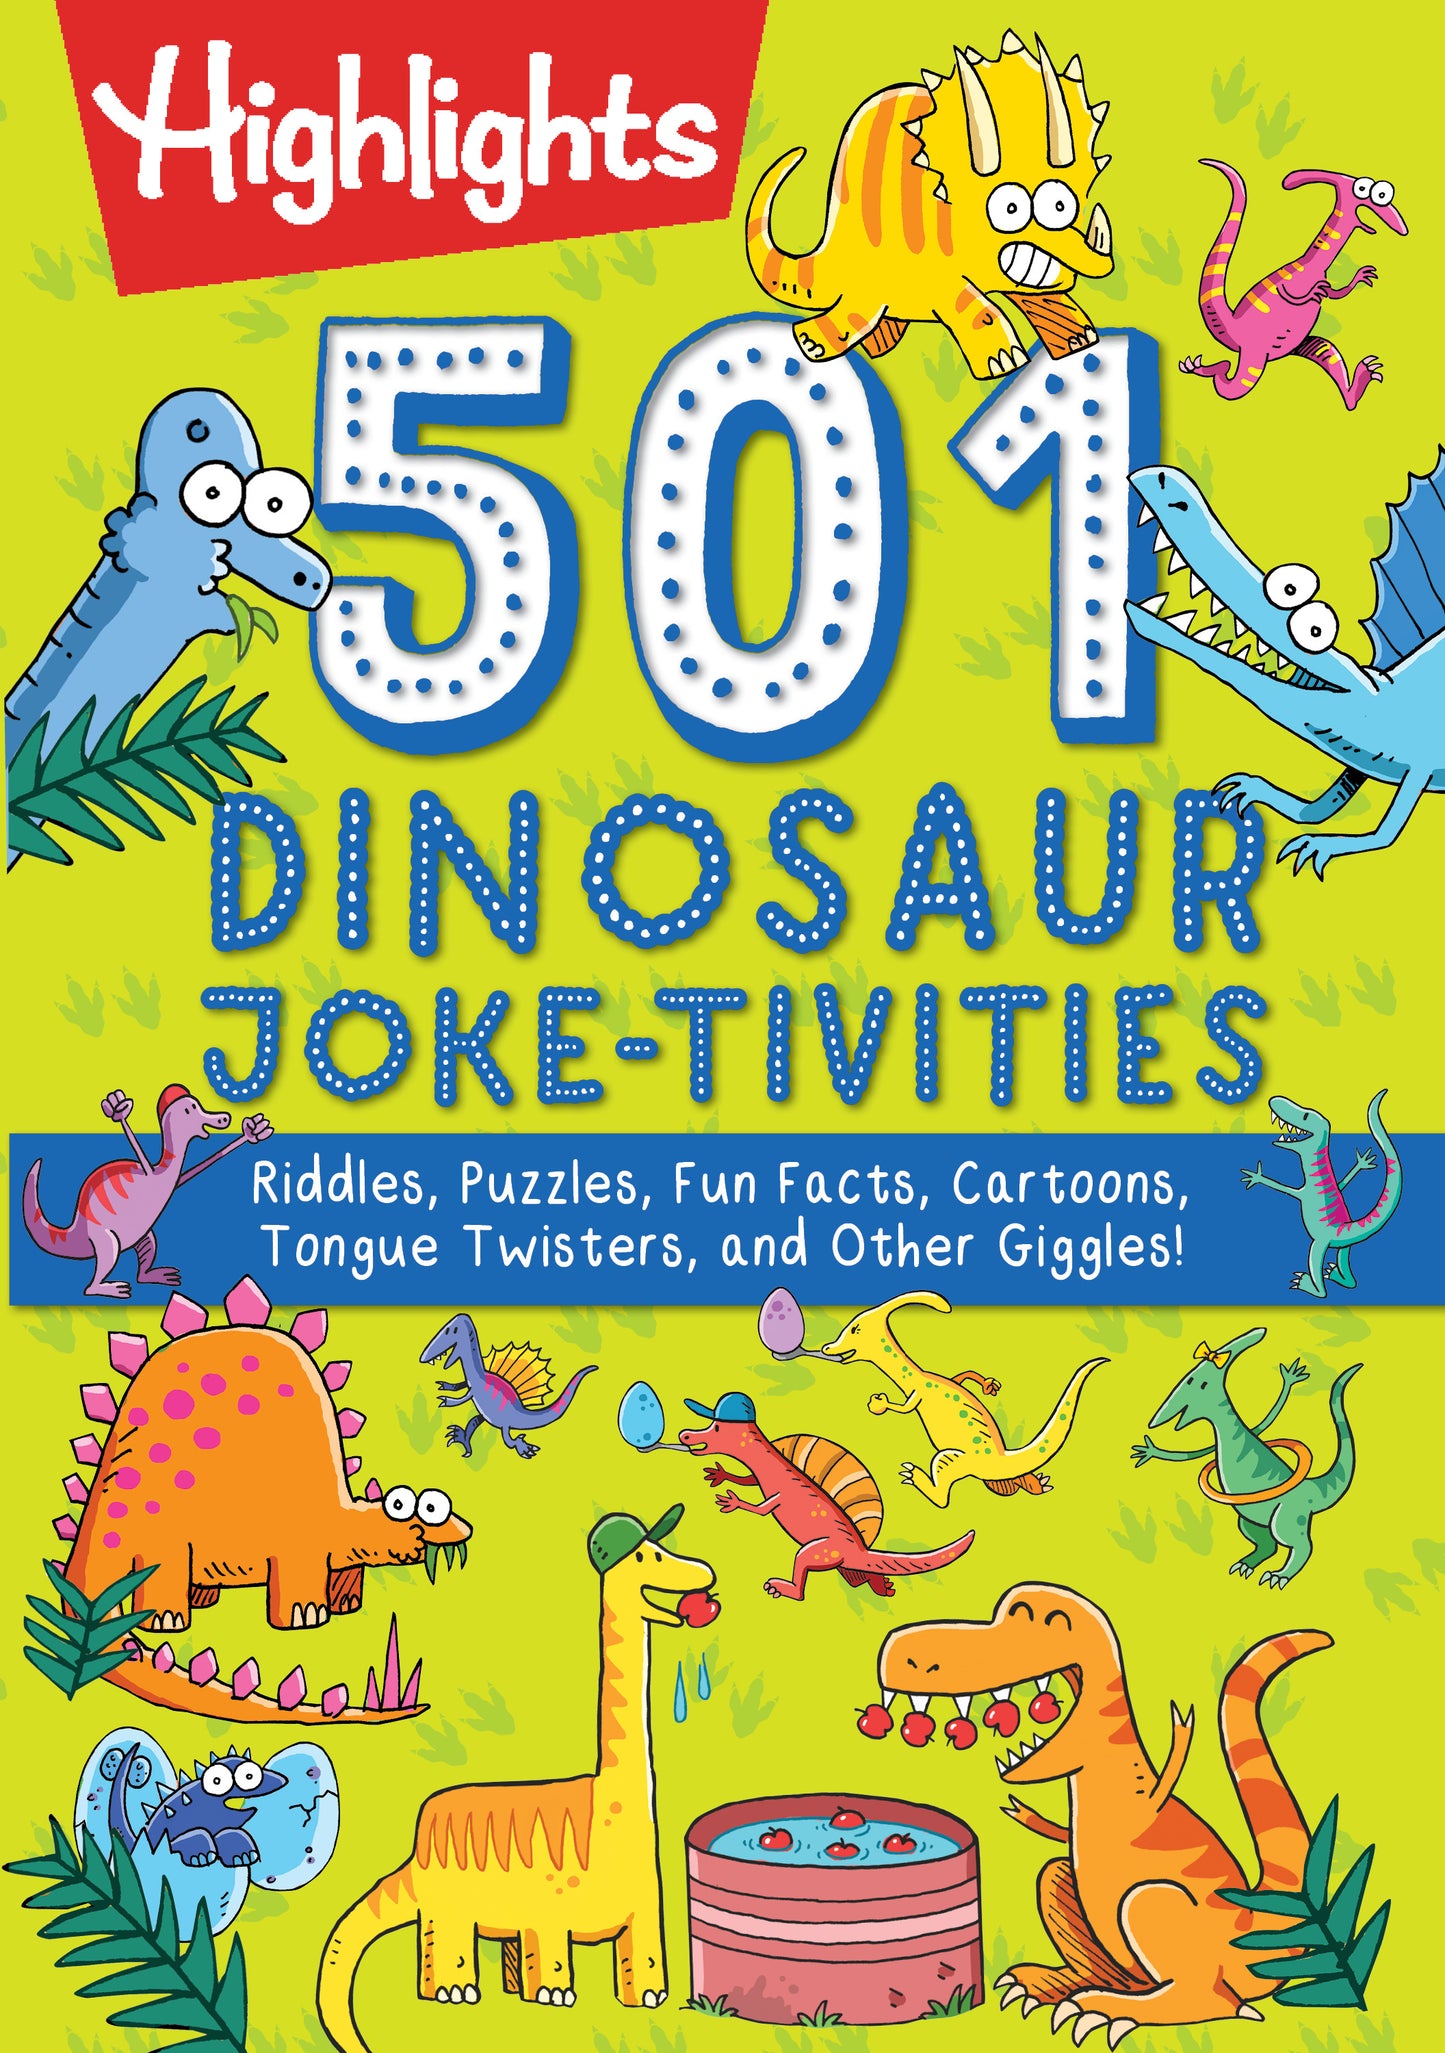 501 Dinosaur Joke-tivities